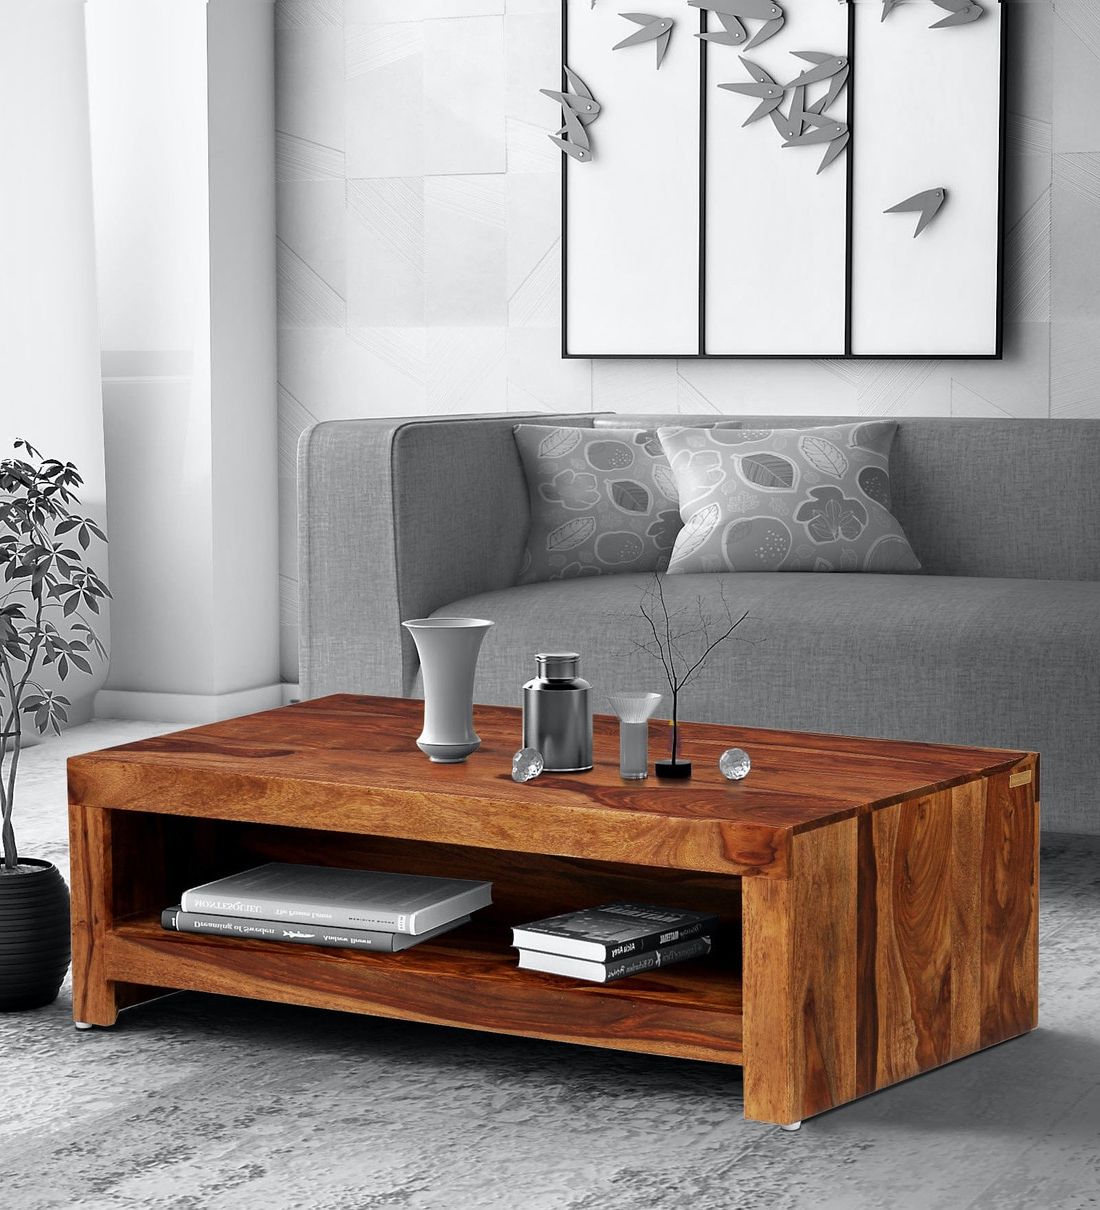 Buy Acropolis Solid Wood Coffee Table In Rustic Teak Finish Within Rustic Wood Coffee Tables (Gallery 8 of 20)